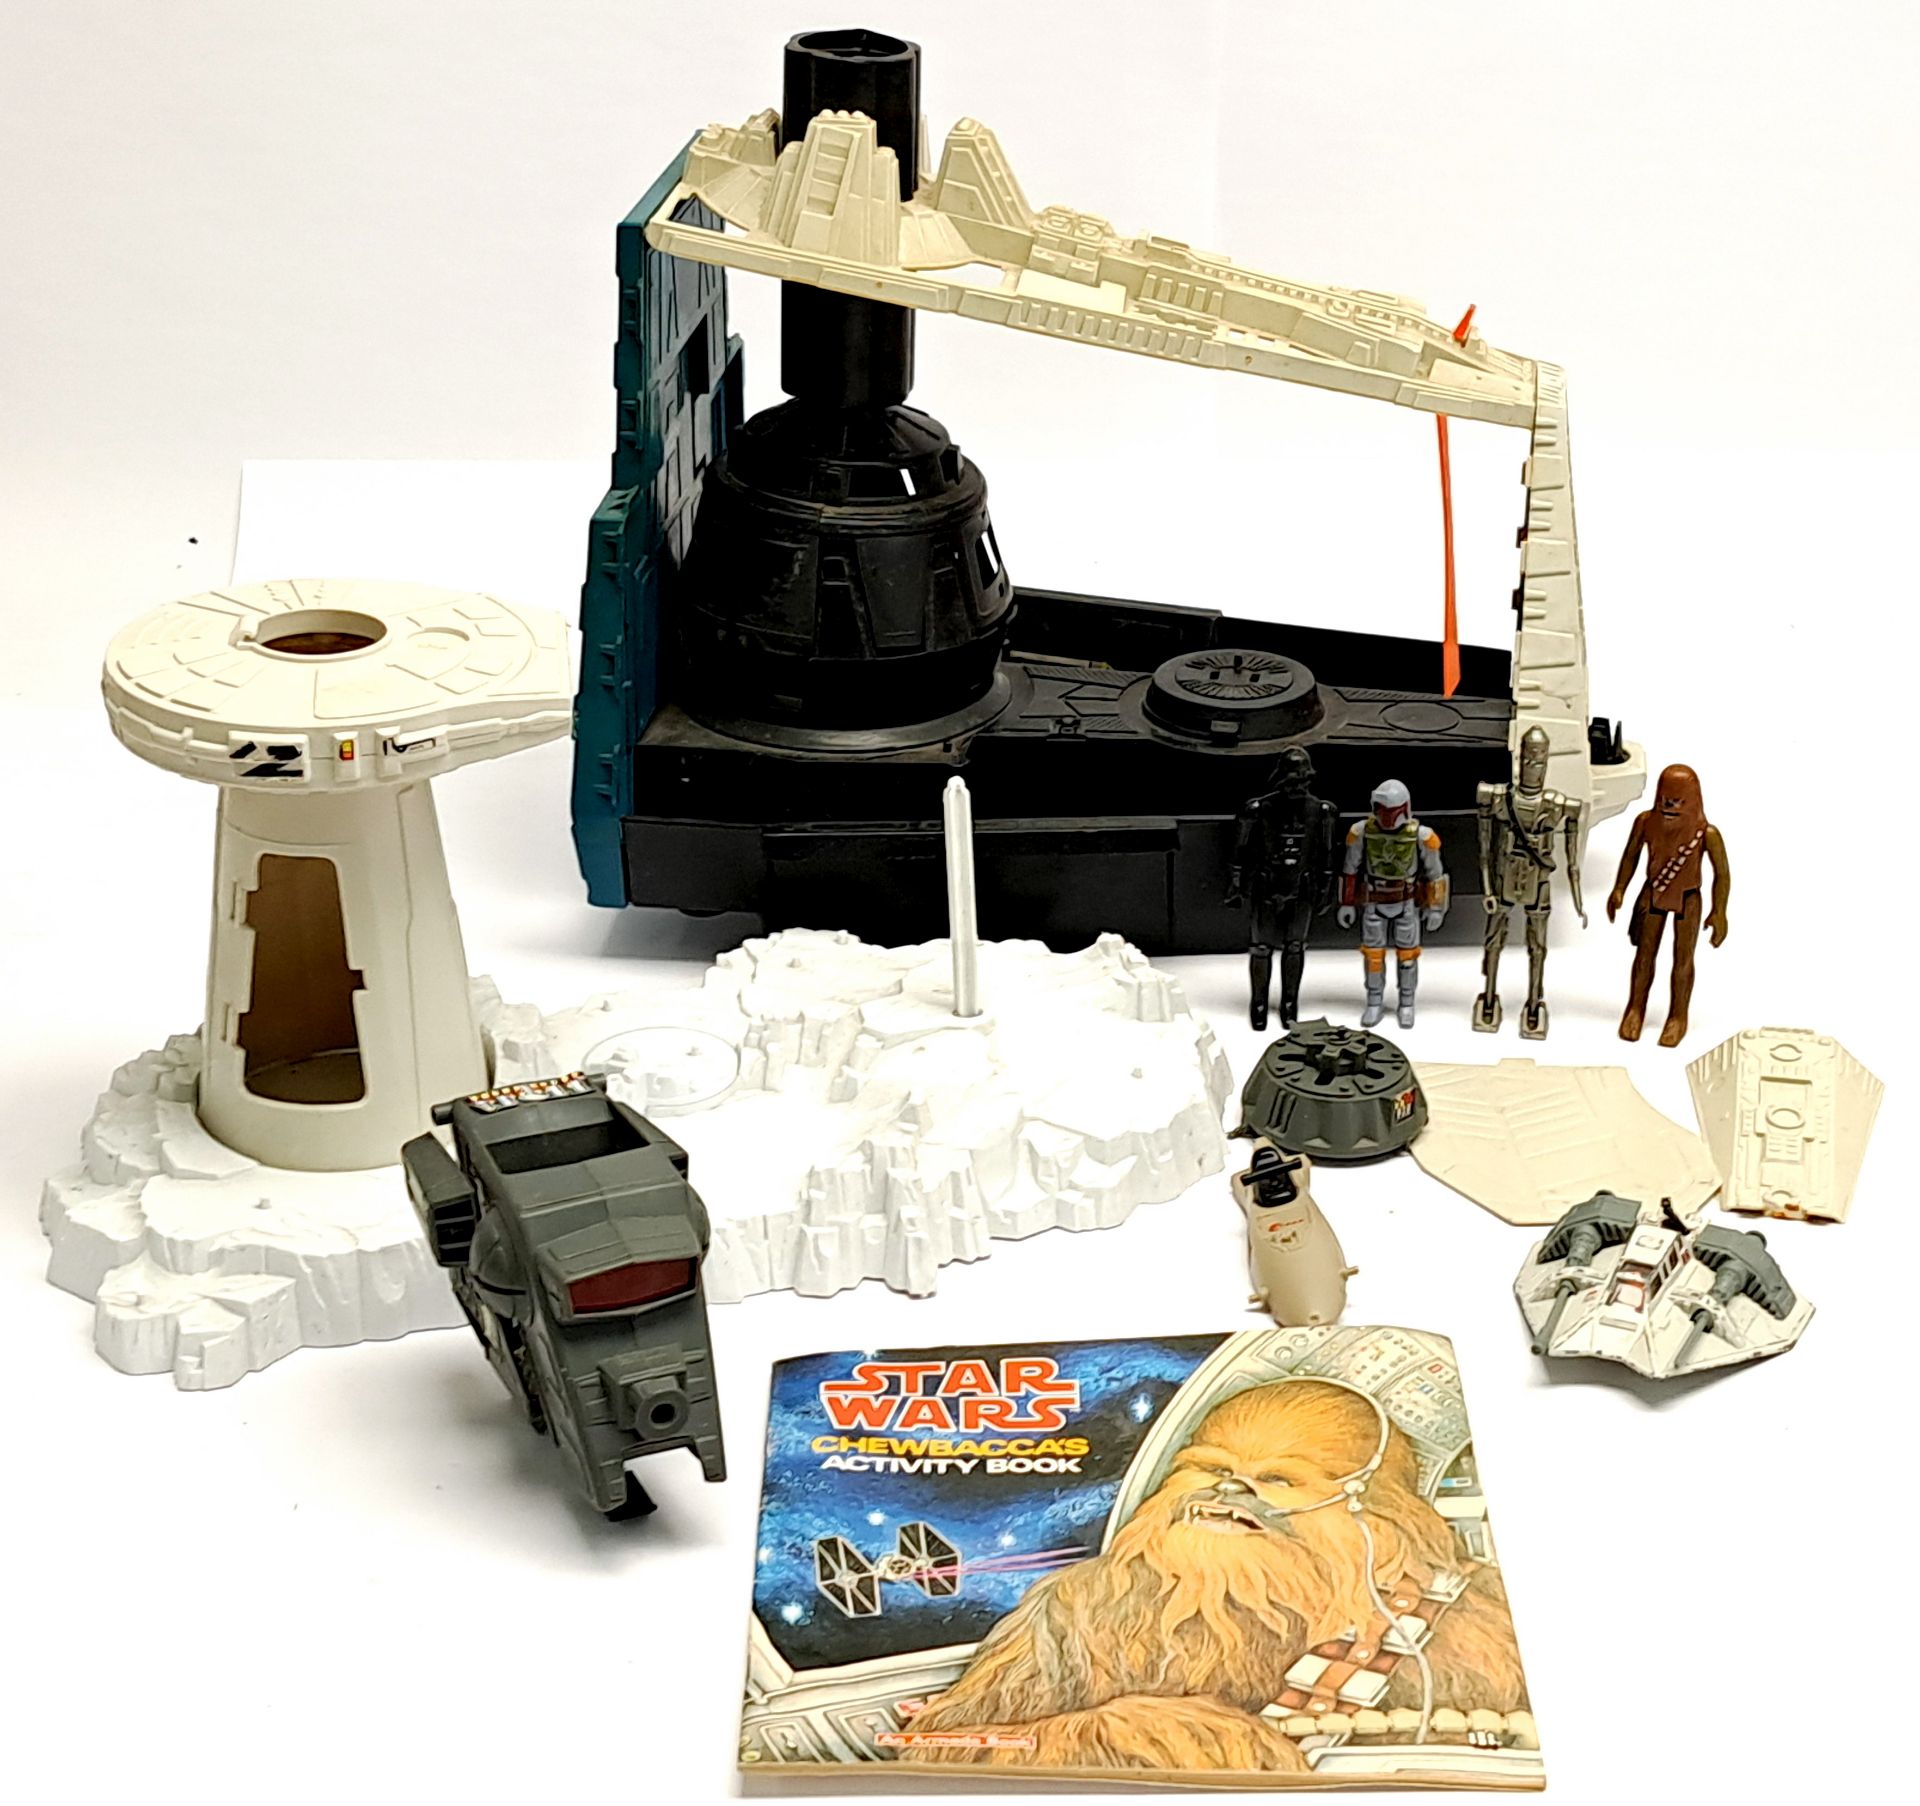 Kenner Star Wars vintage loose 3 3/4" figures, playsets & others